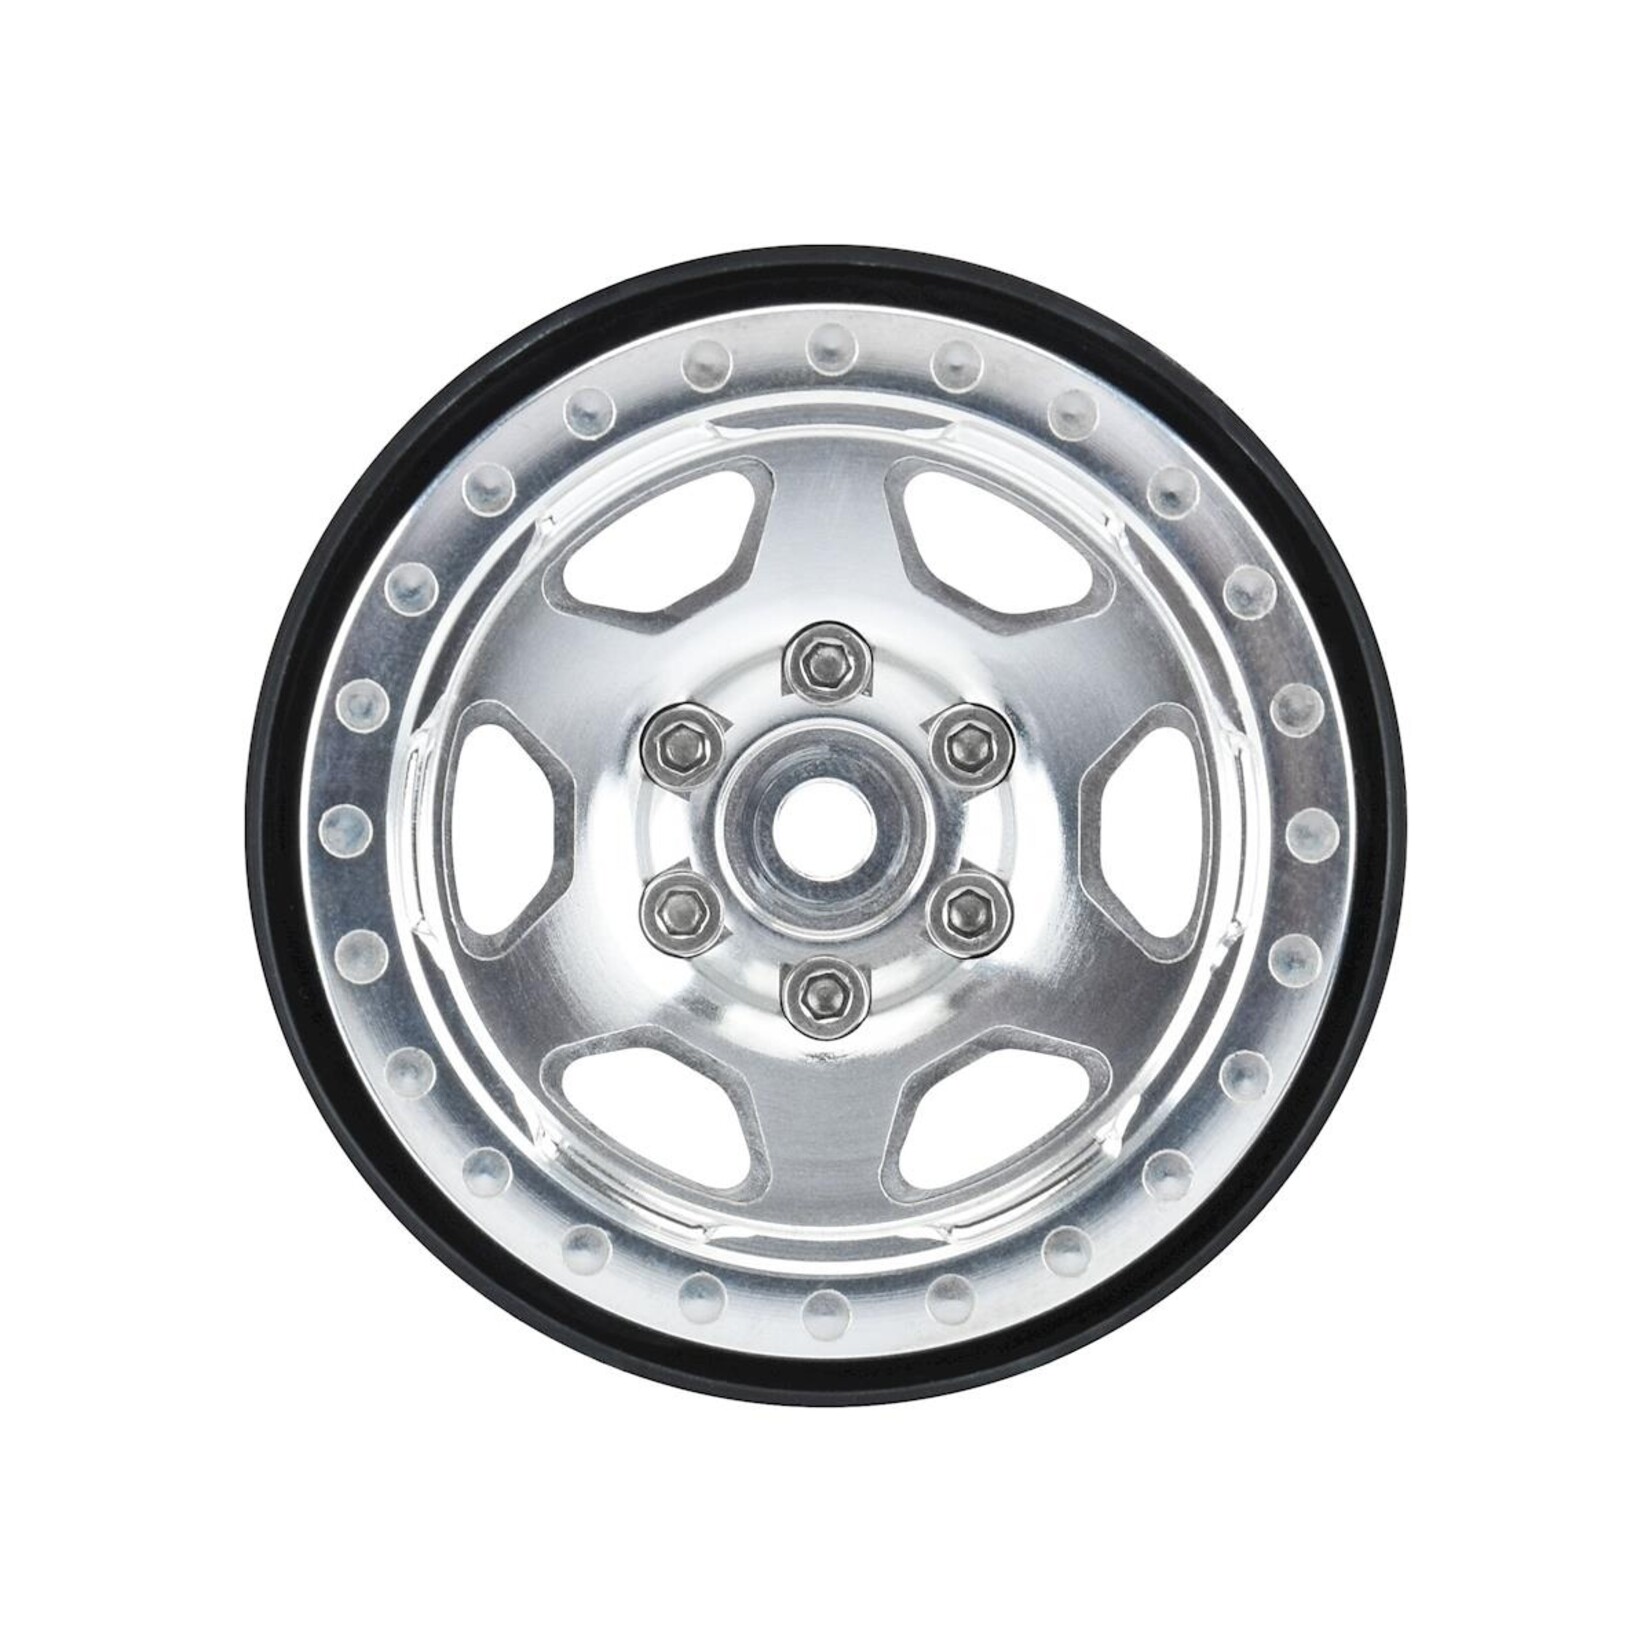 Pro-Line Pro-Line Crestline 1.9" Aluminum Composite Internal Bead-Loc Wheels (Silver) (2) #2791-00